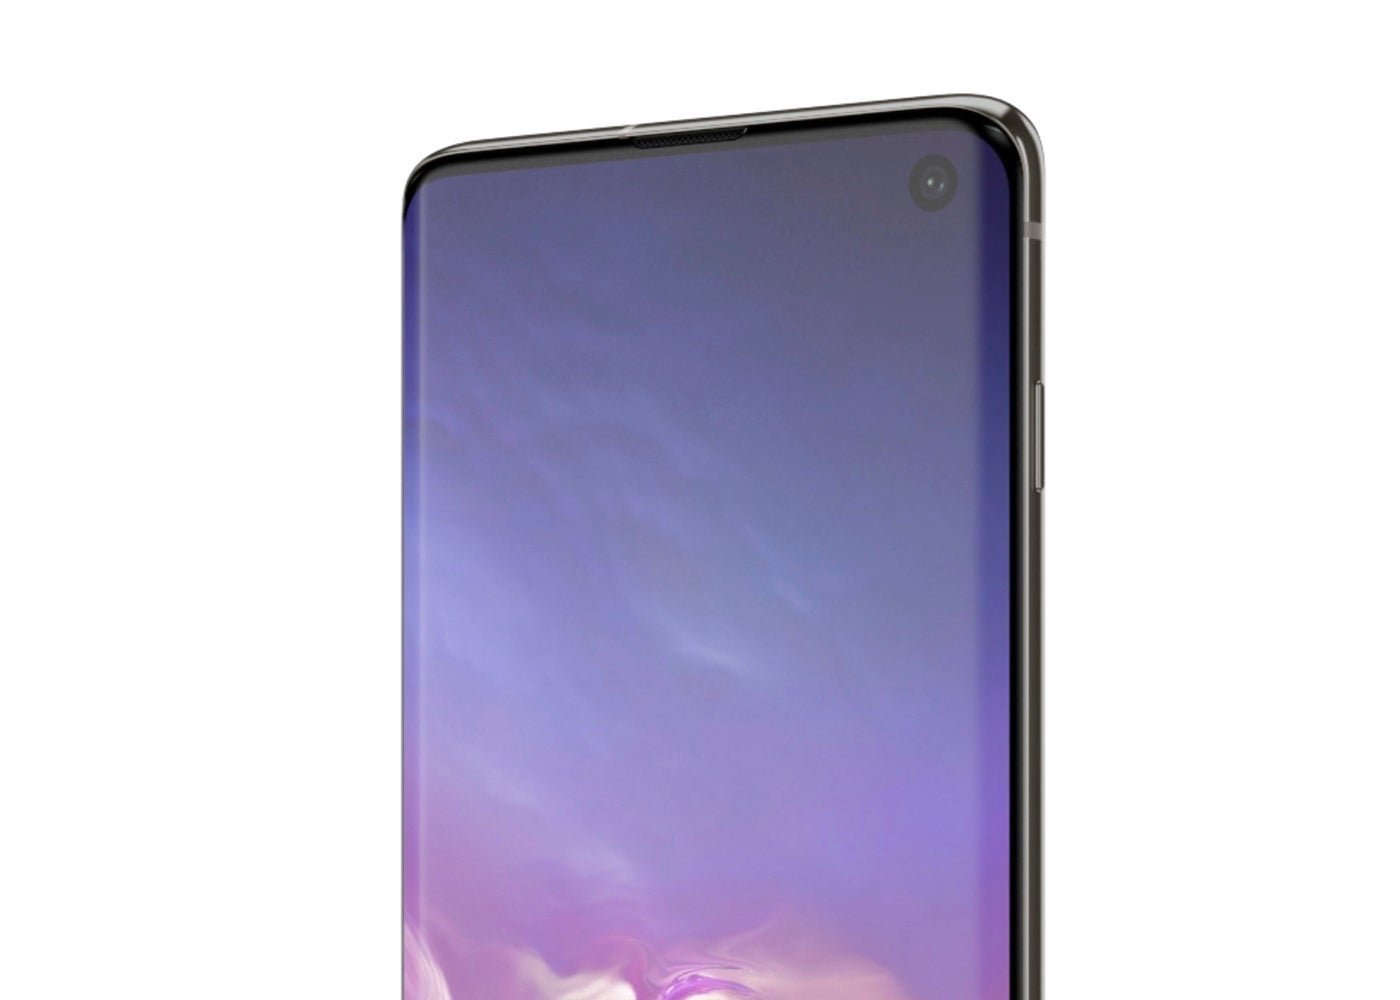 Samsung Galaxy S10 frontal 2019